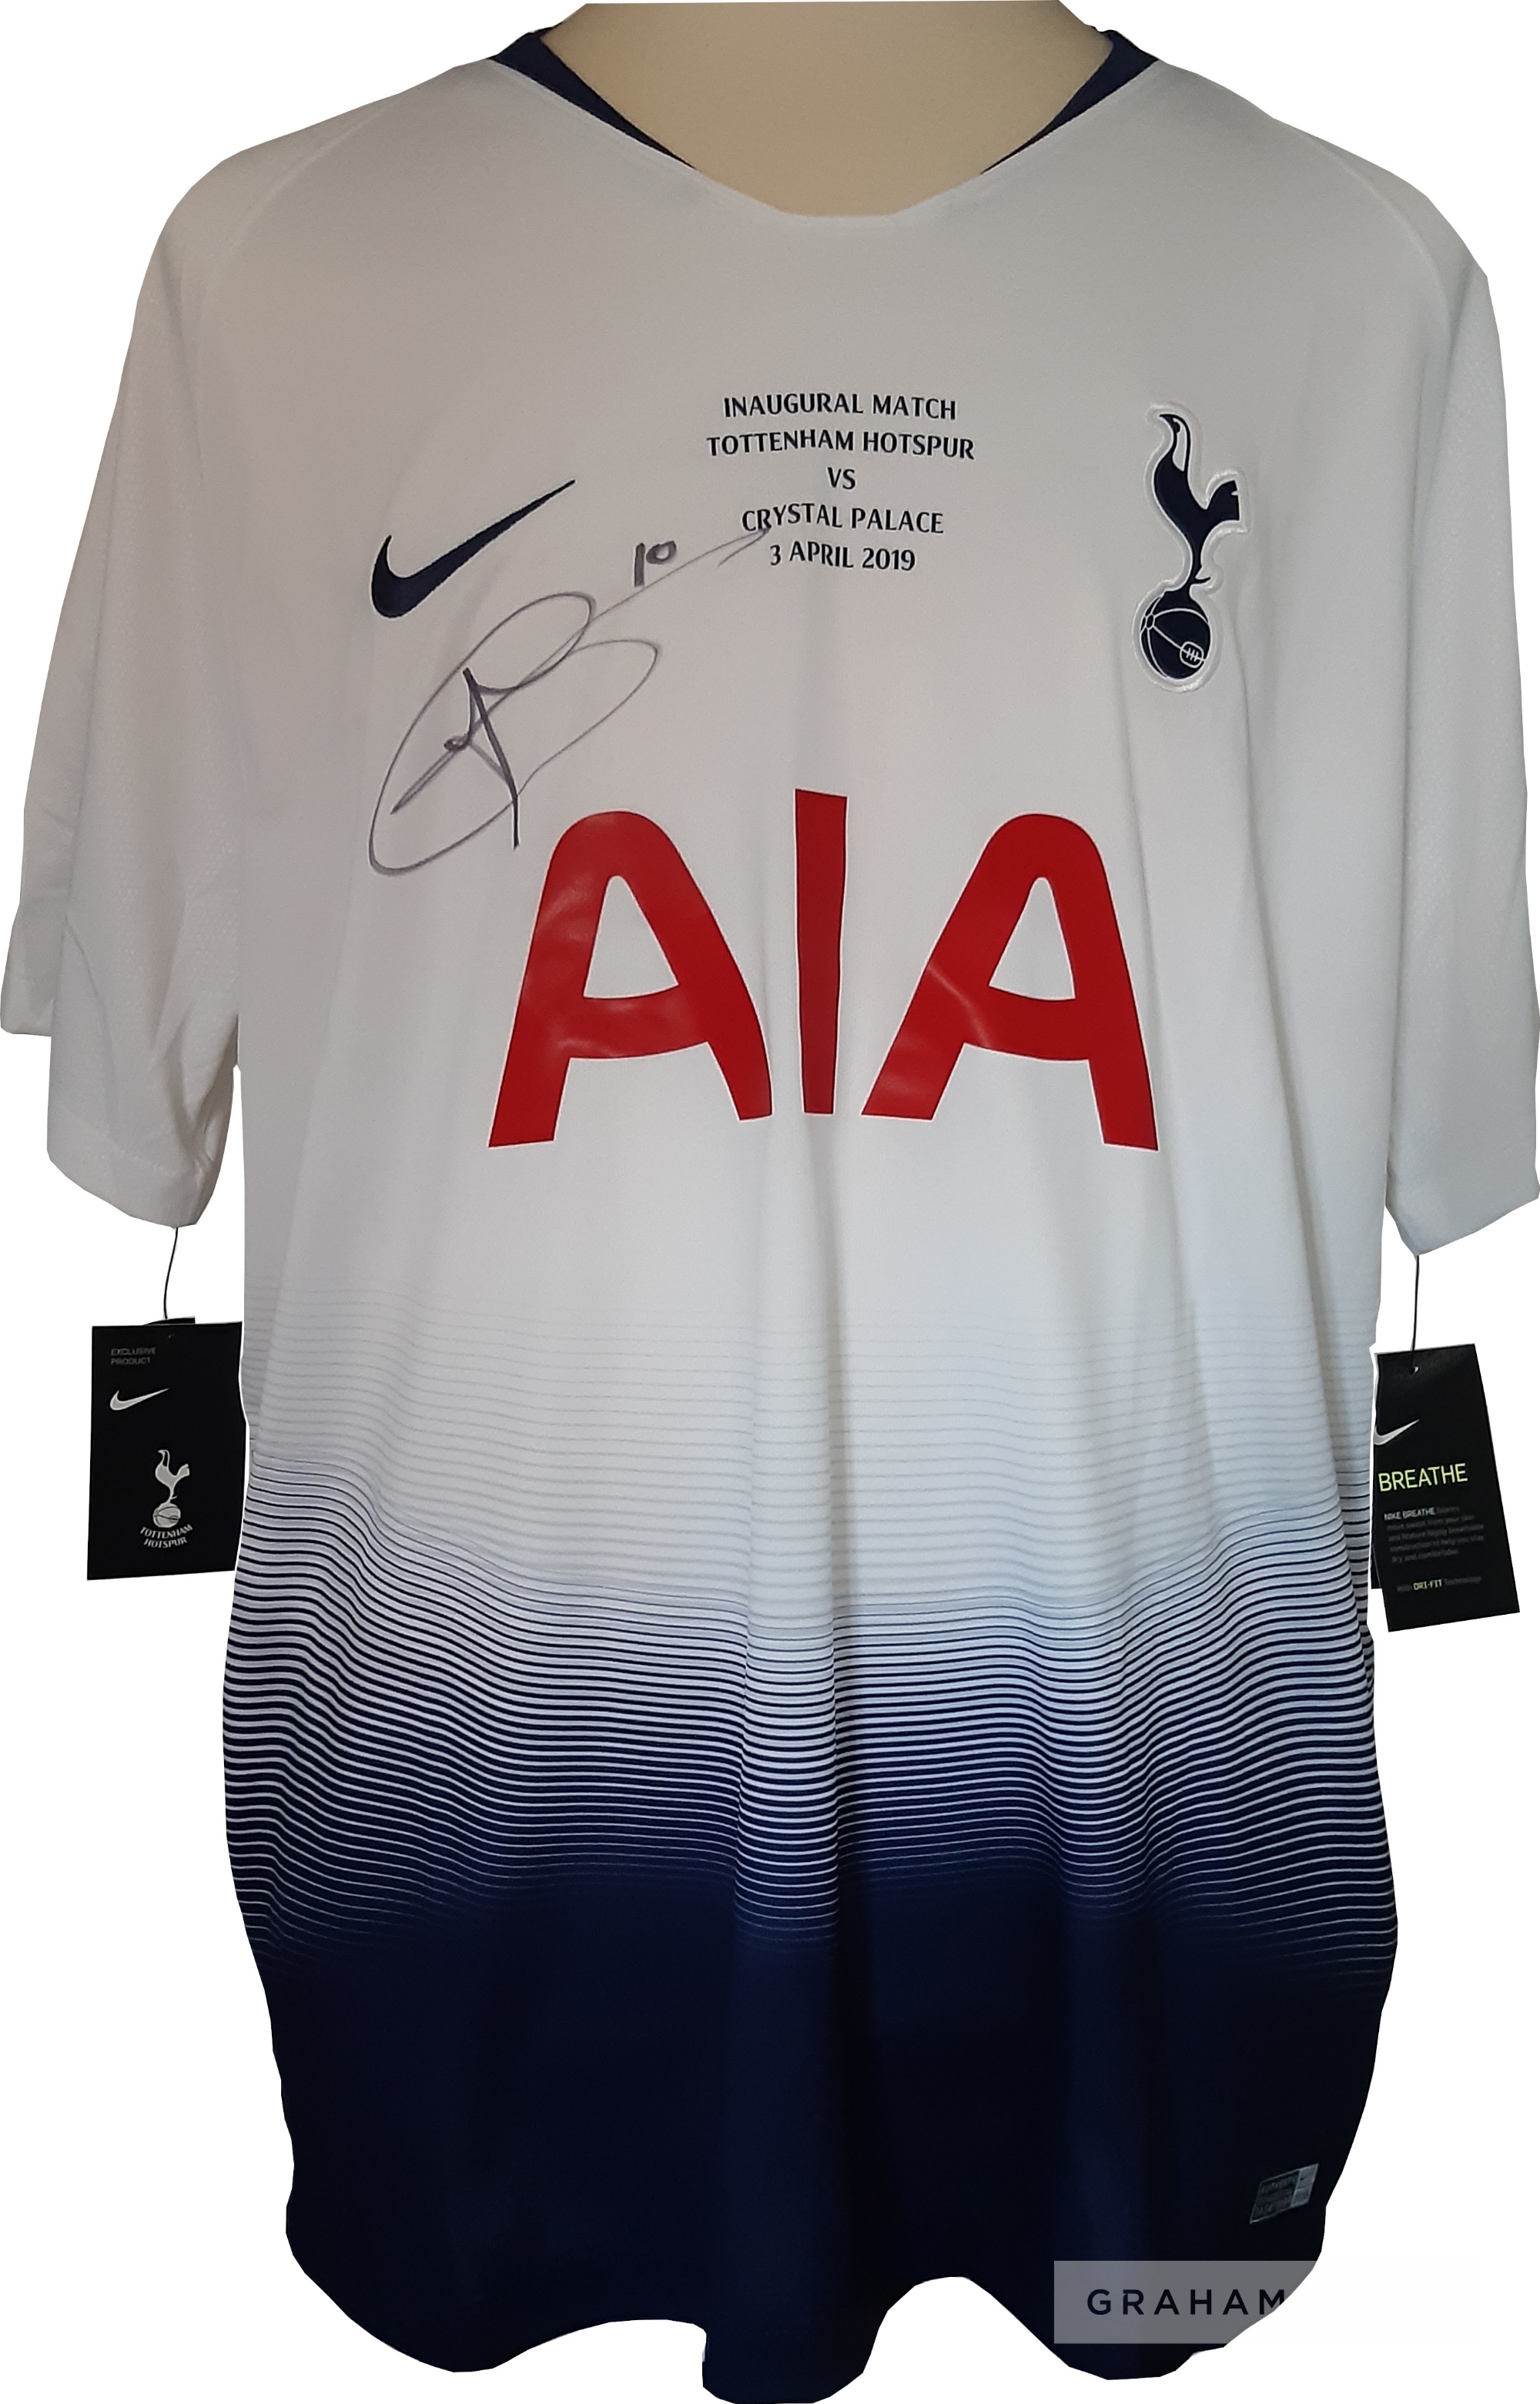 Harry Kane signed white Tottenham Hotspur replica jersey season 2018-19, commemorating the first